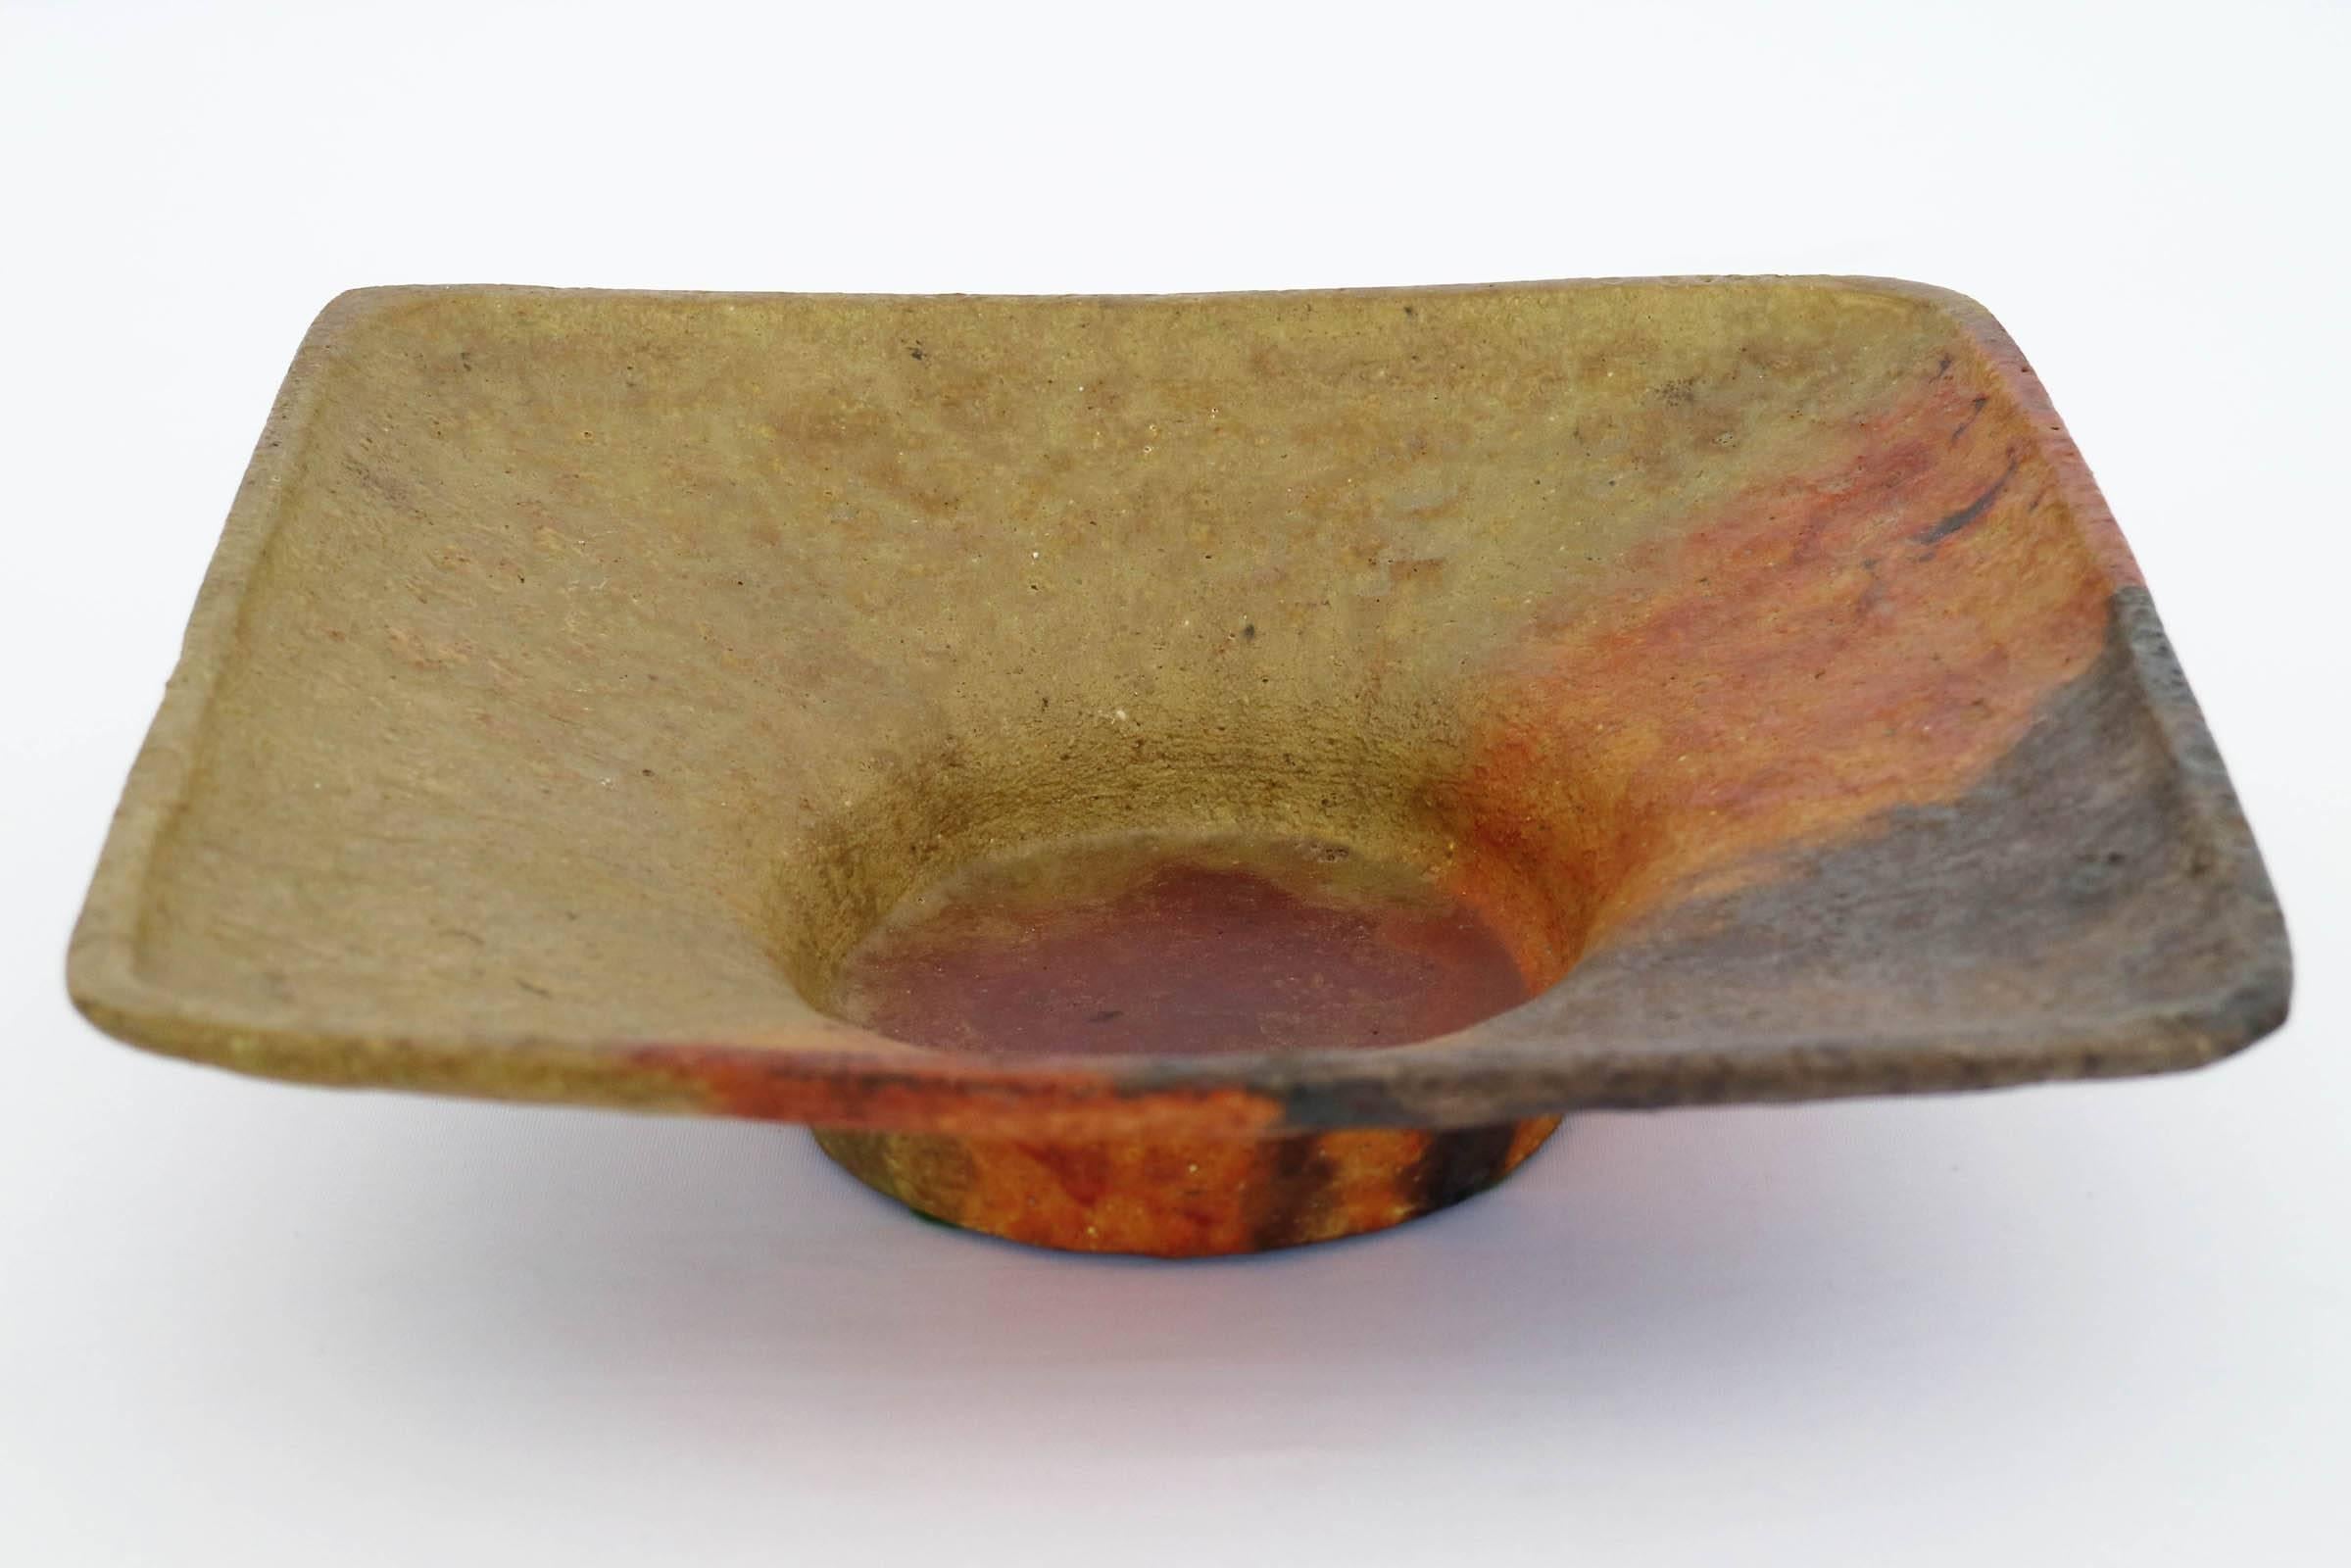 Glazed ceramic Bowl.
Signed